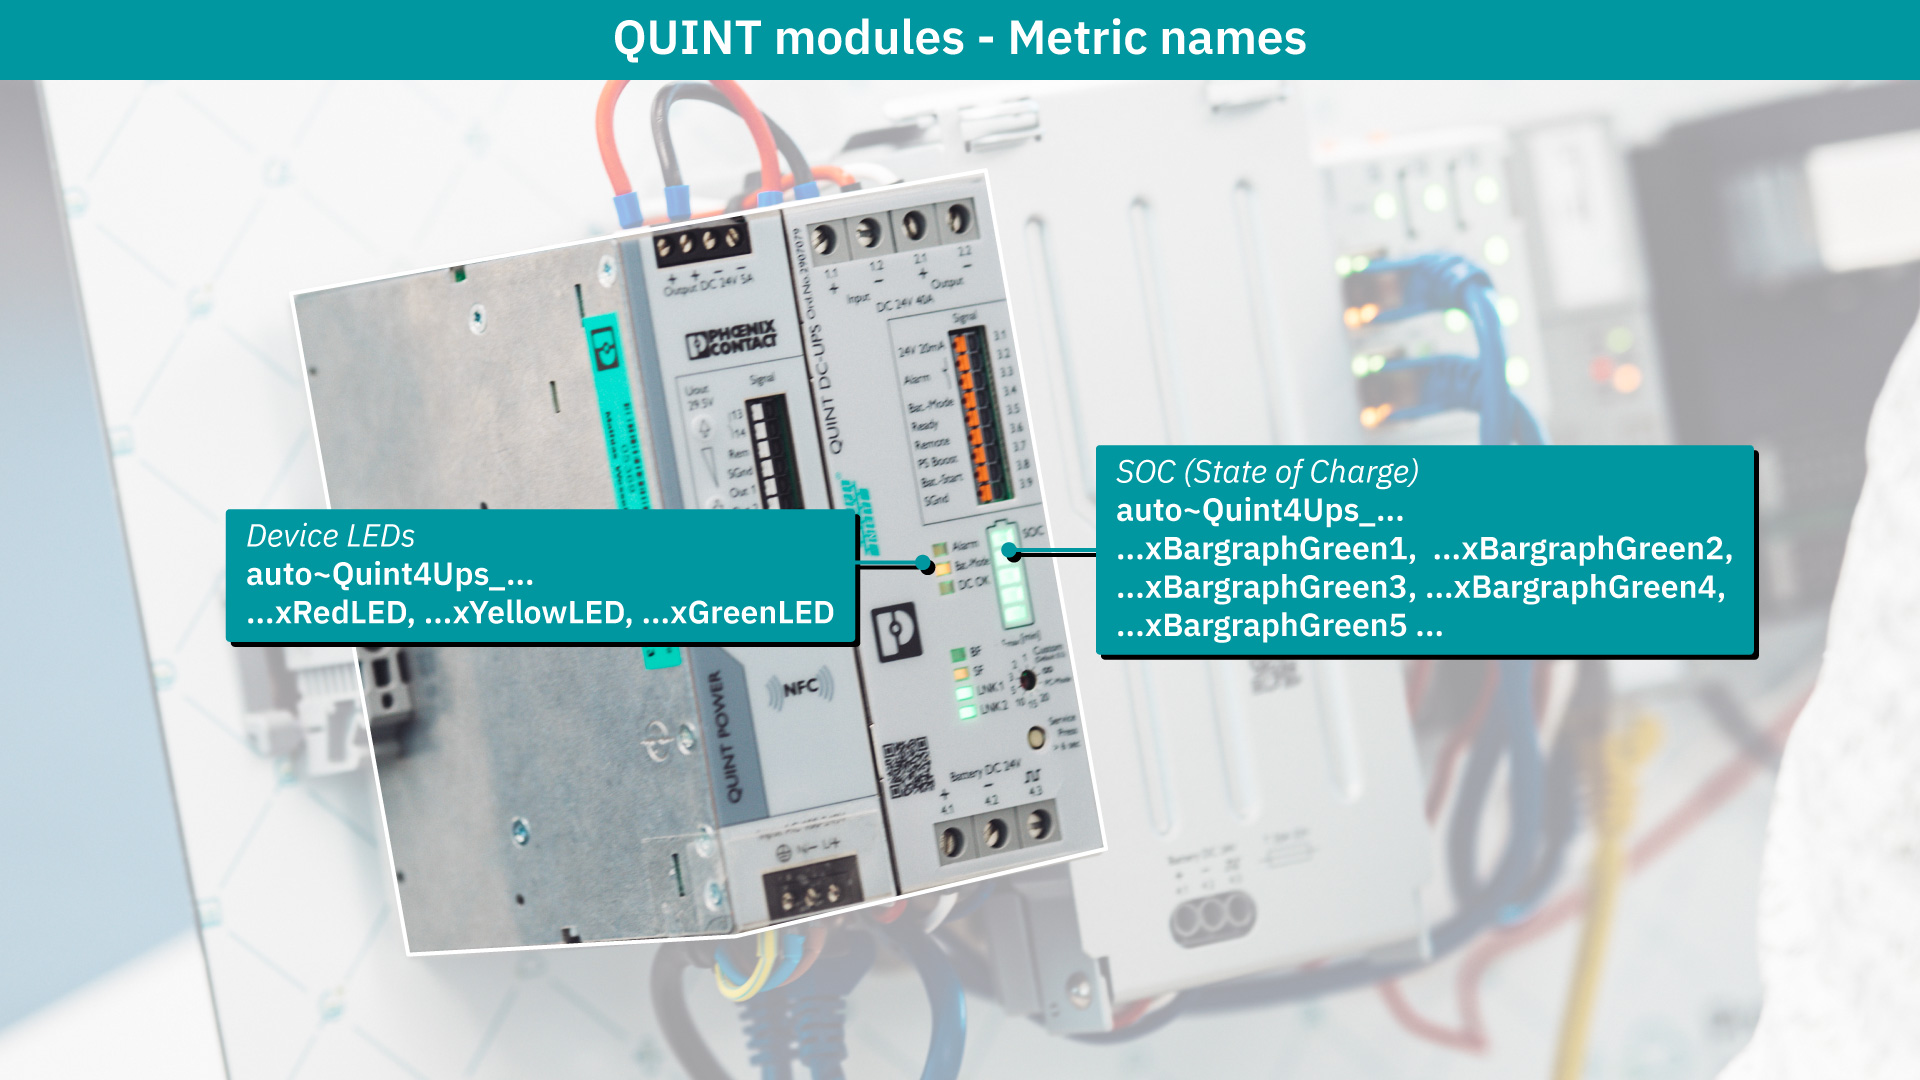 Naming scheme for QUINT module metrics